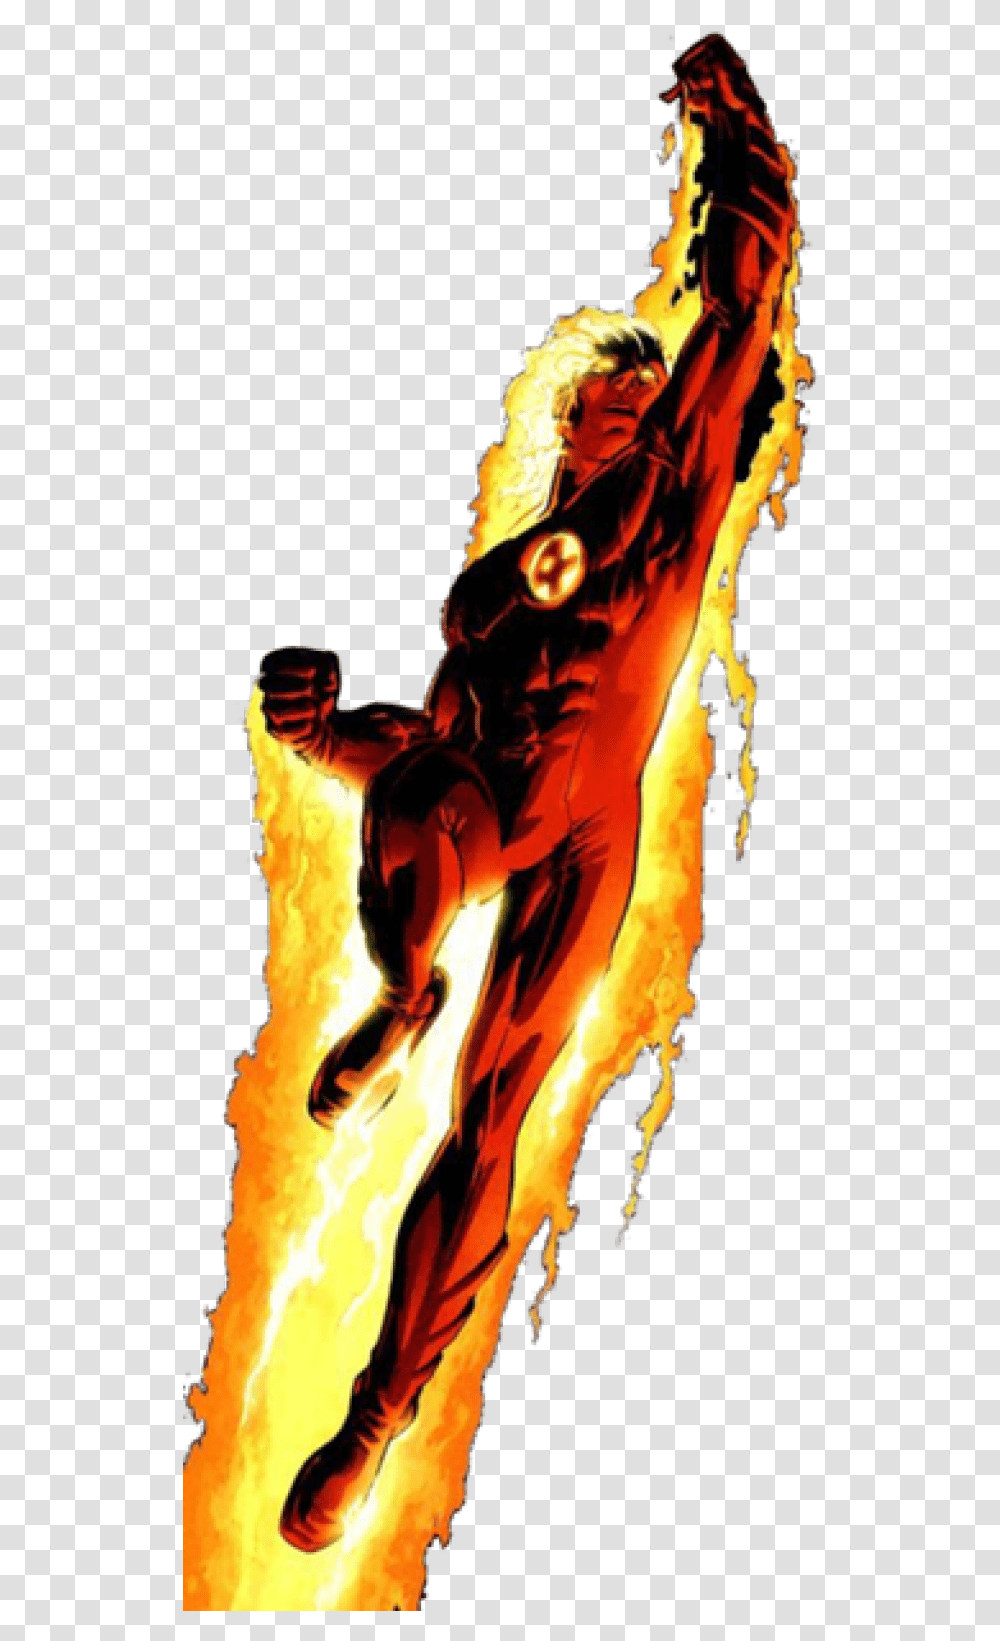 Marvel Fantastic Four Logo Images Gallery Marvel Human Torch Fantastic Four, Bonfire, Flame, Dragon, Person Transparent Png